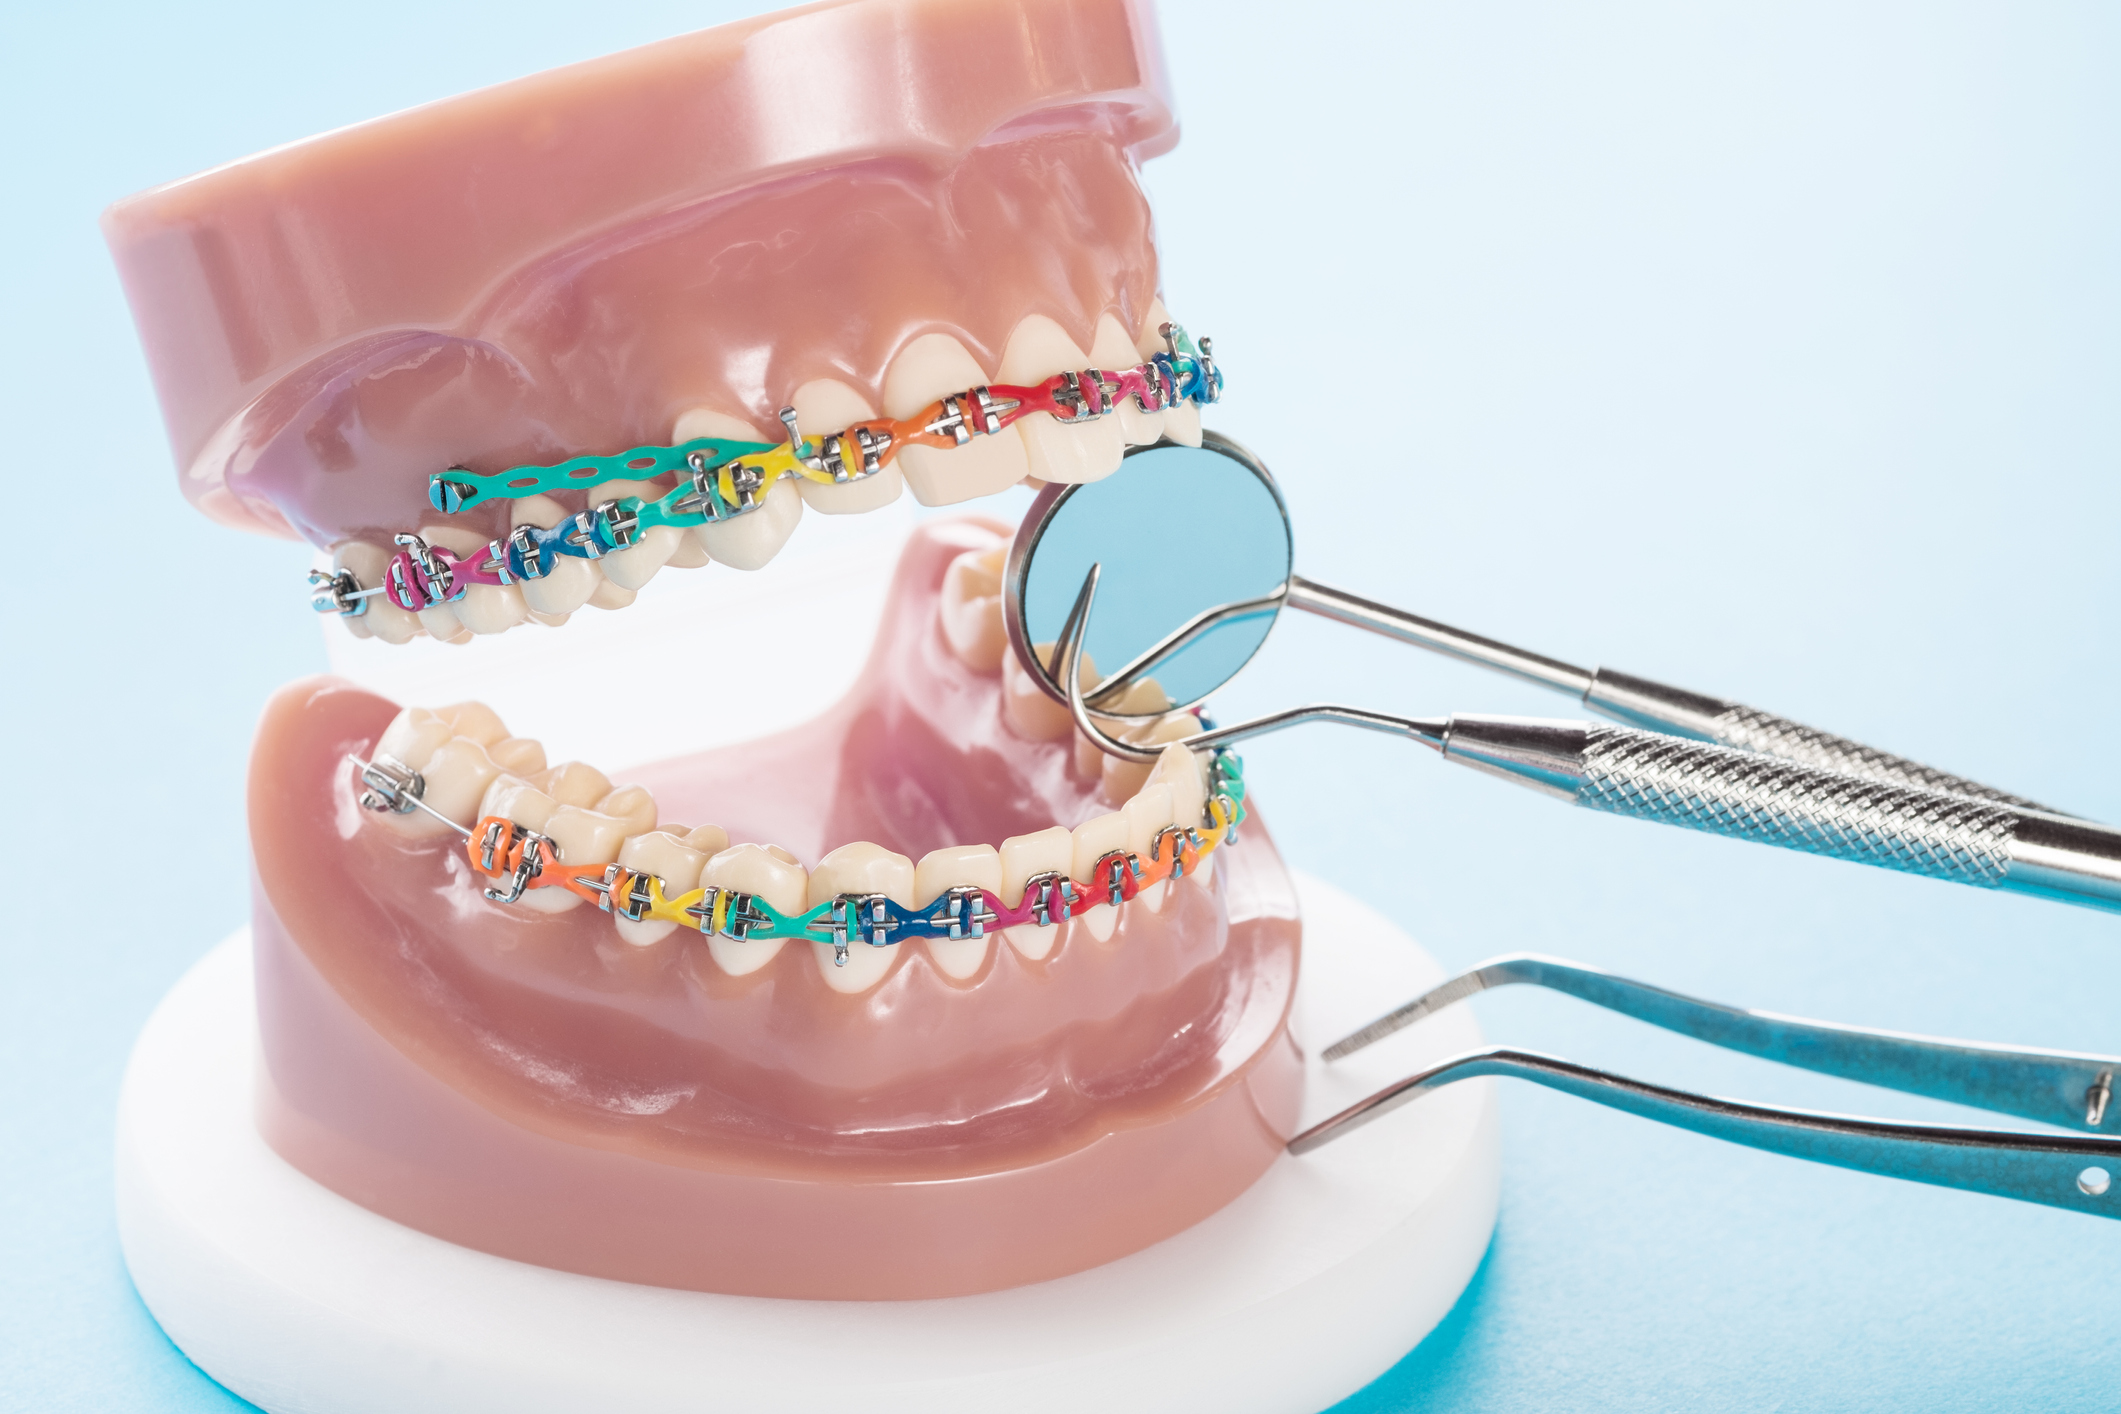 Dentists vs Orthodontists